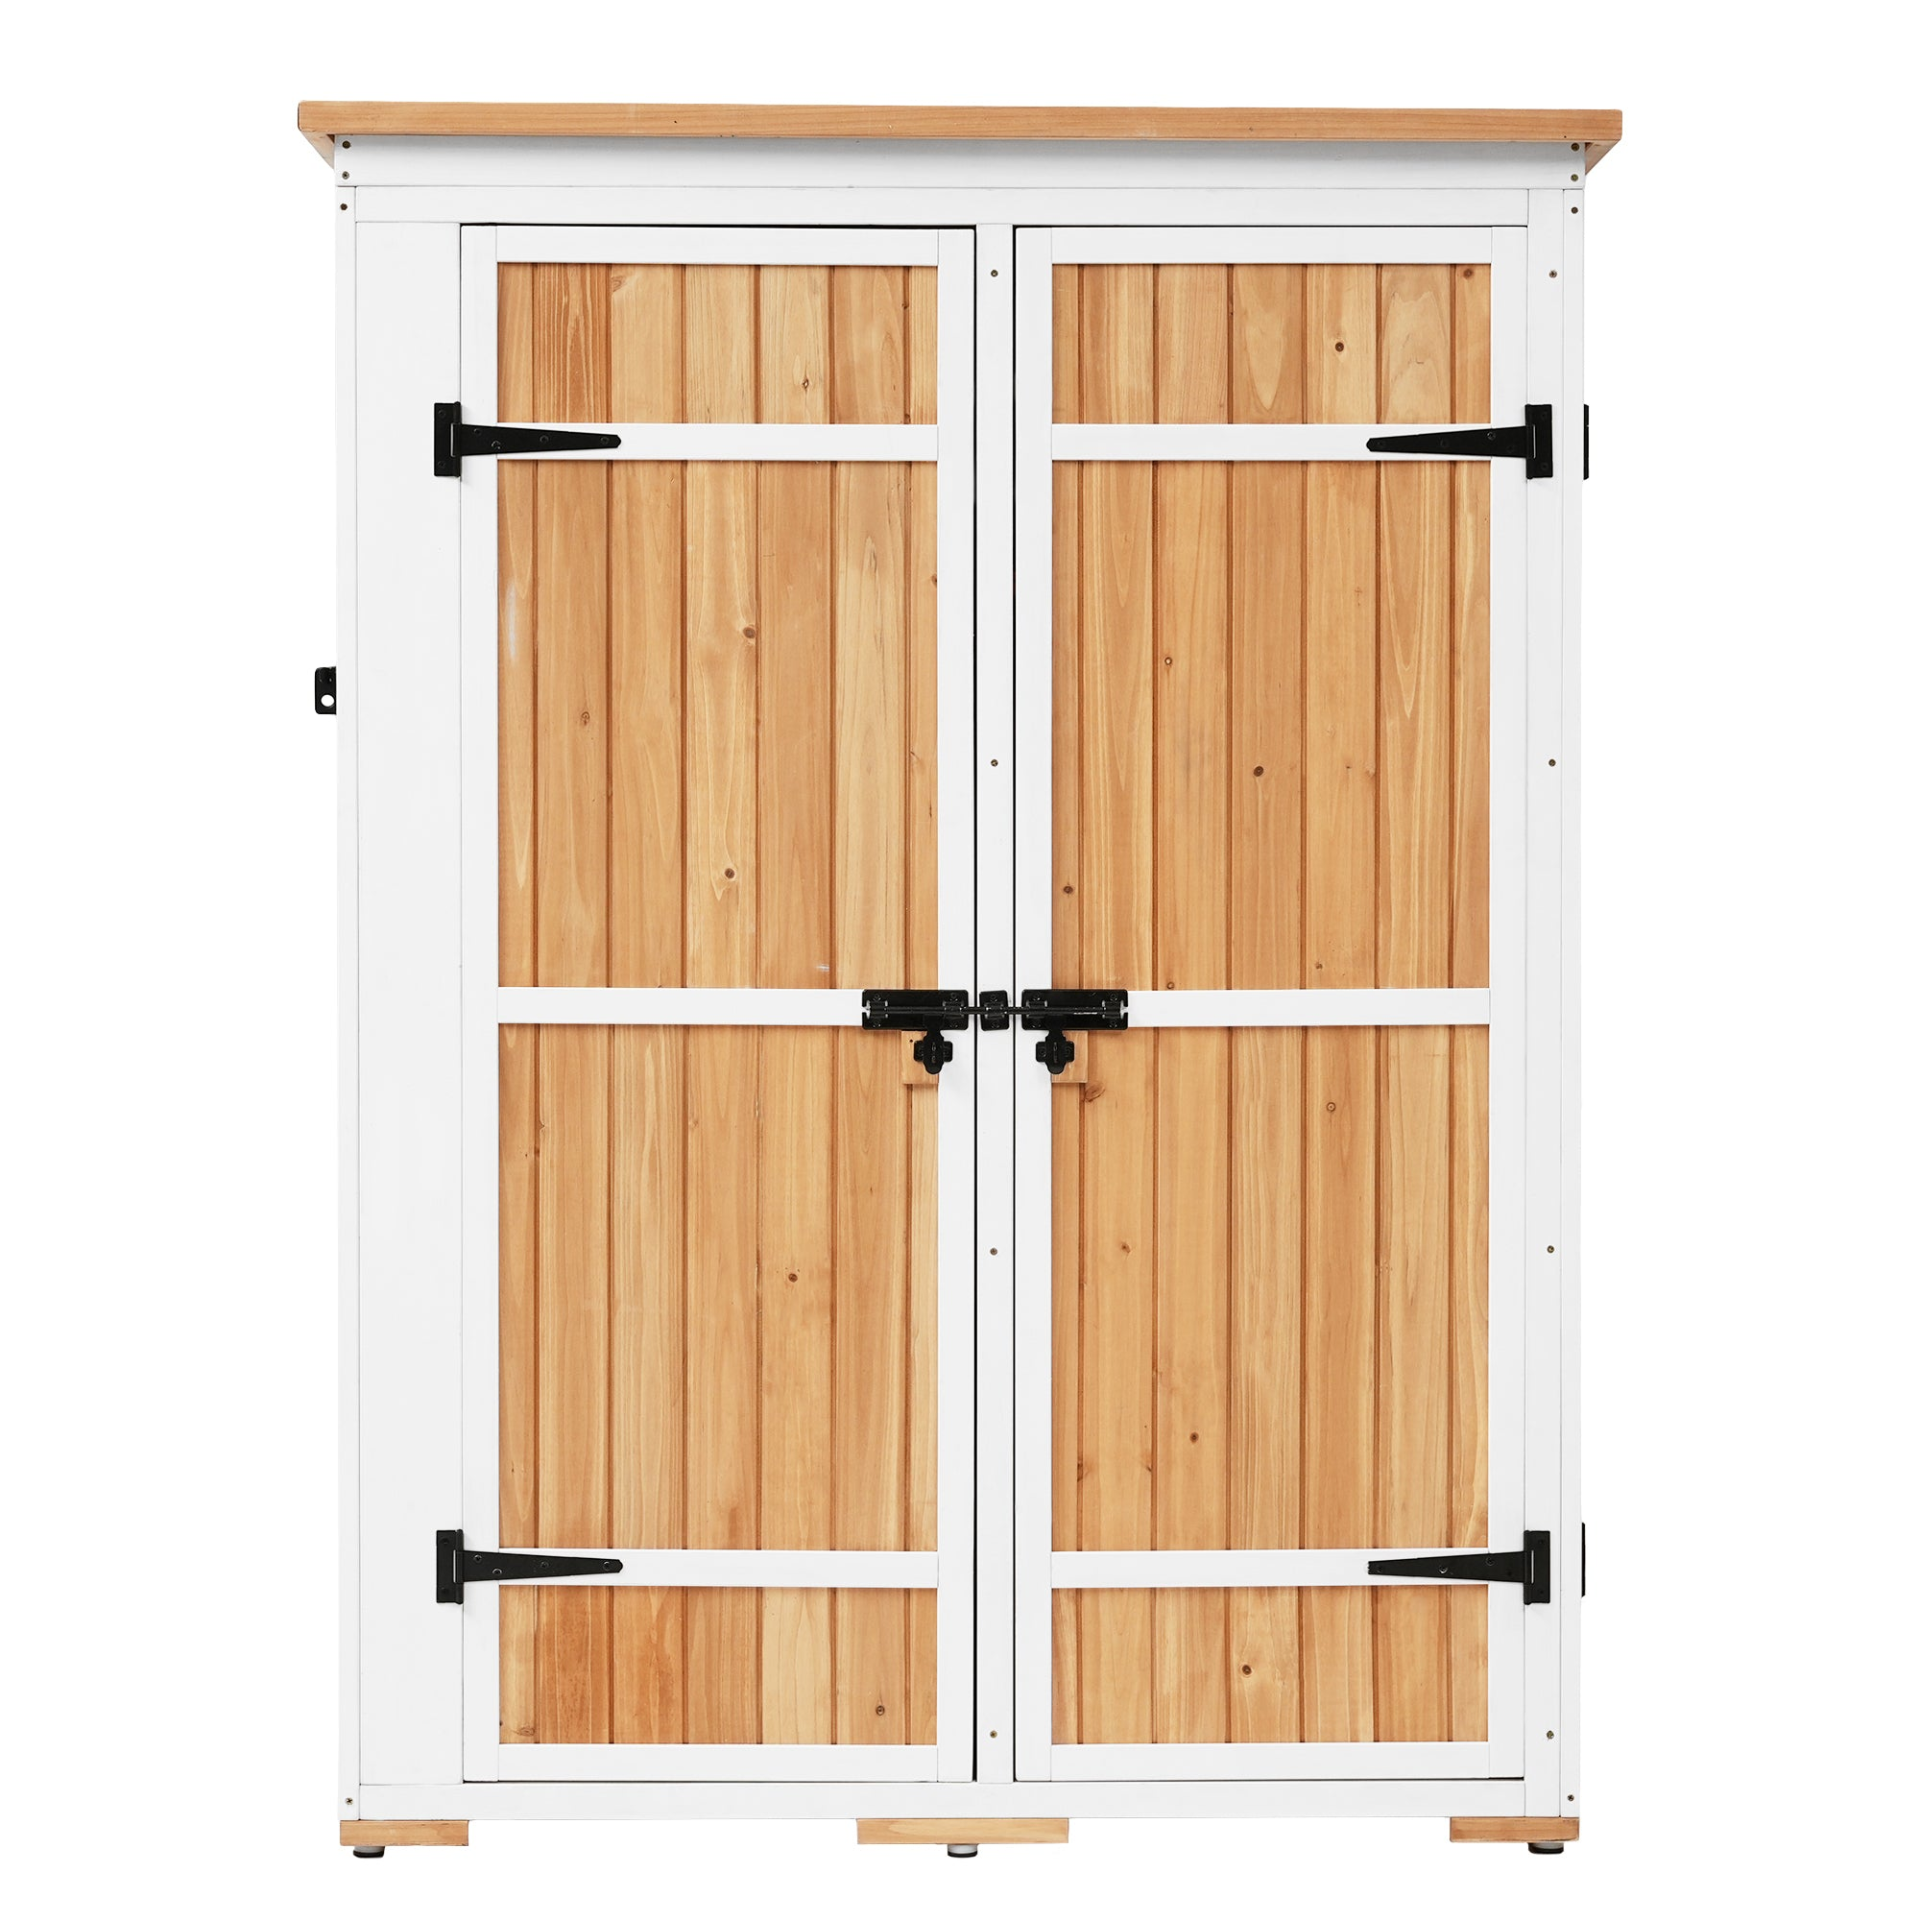 Outdoor 5.5ft Hx4.1ft L Wood Storage Shed, Garden Tool Cabinet with Waterproof Asphalt Roof, Four Lockable Doors, Multiple-tier Shelves, Natural, Goodies N Stuff